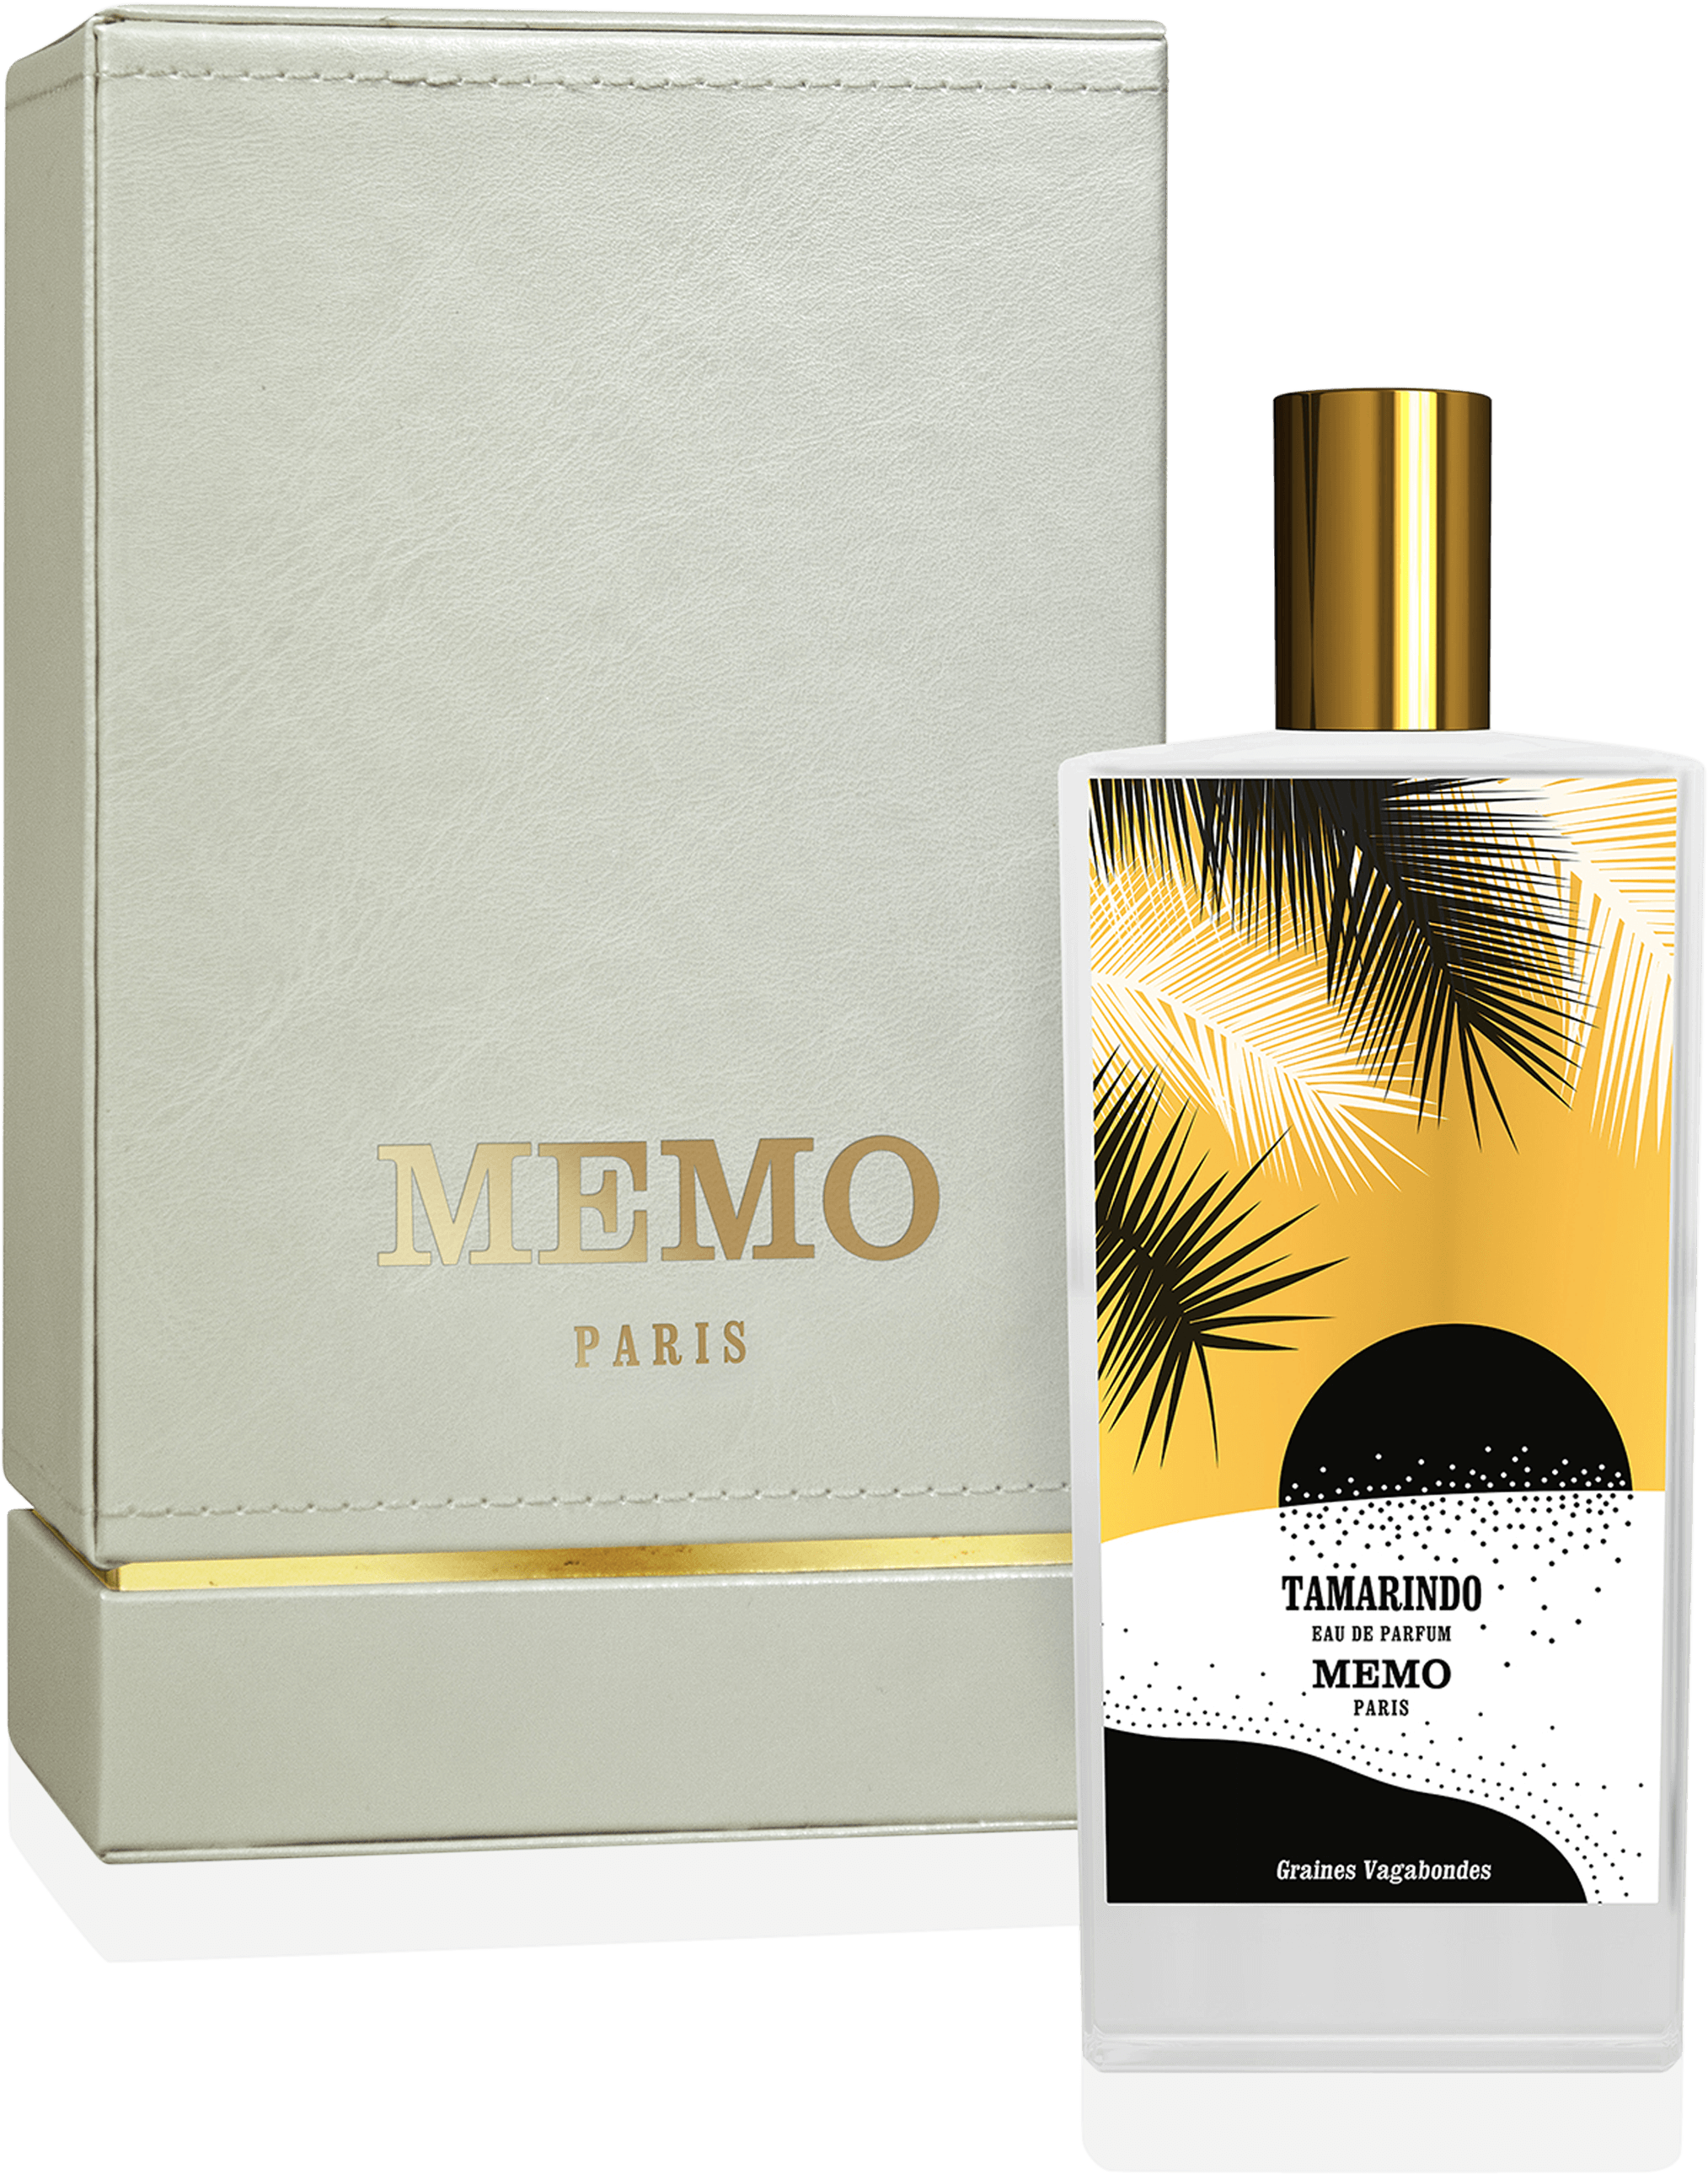 Tamarindo Eau De Parfum 75ml Memo Paris - Memo Perfume New 2019 Clipart (2027x2580), Png Download